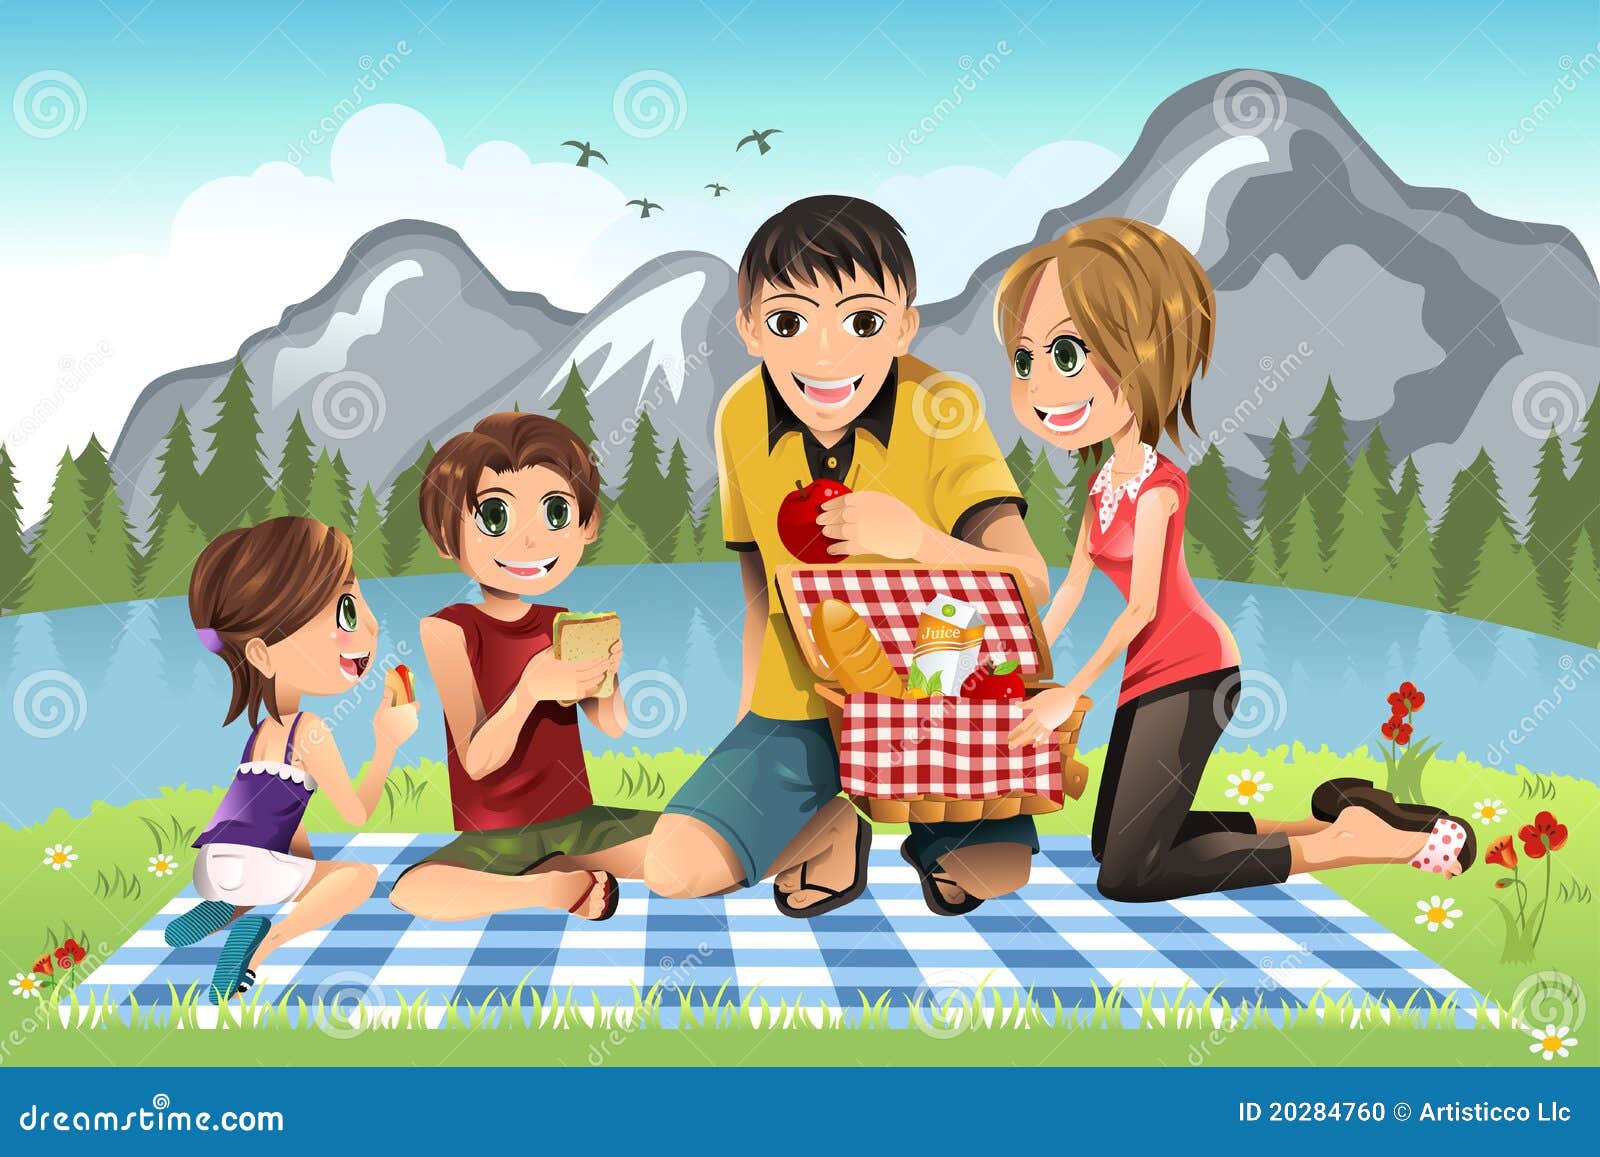 clipart family picnic - photo #28